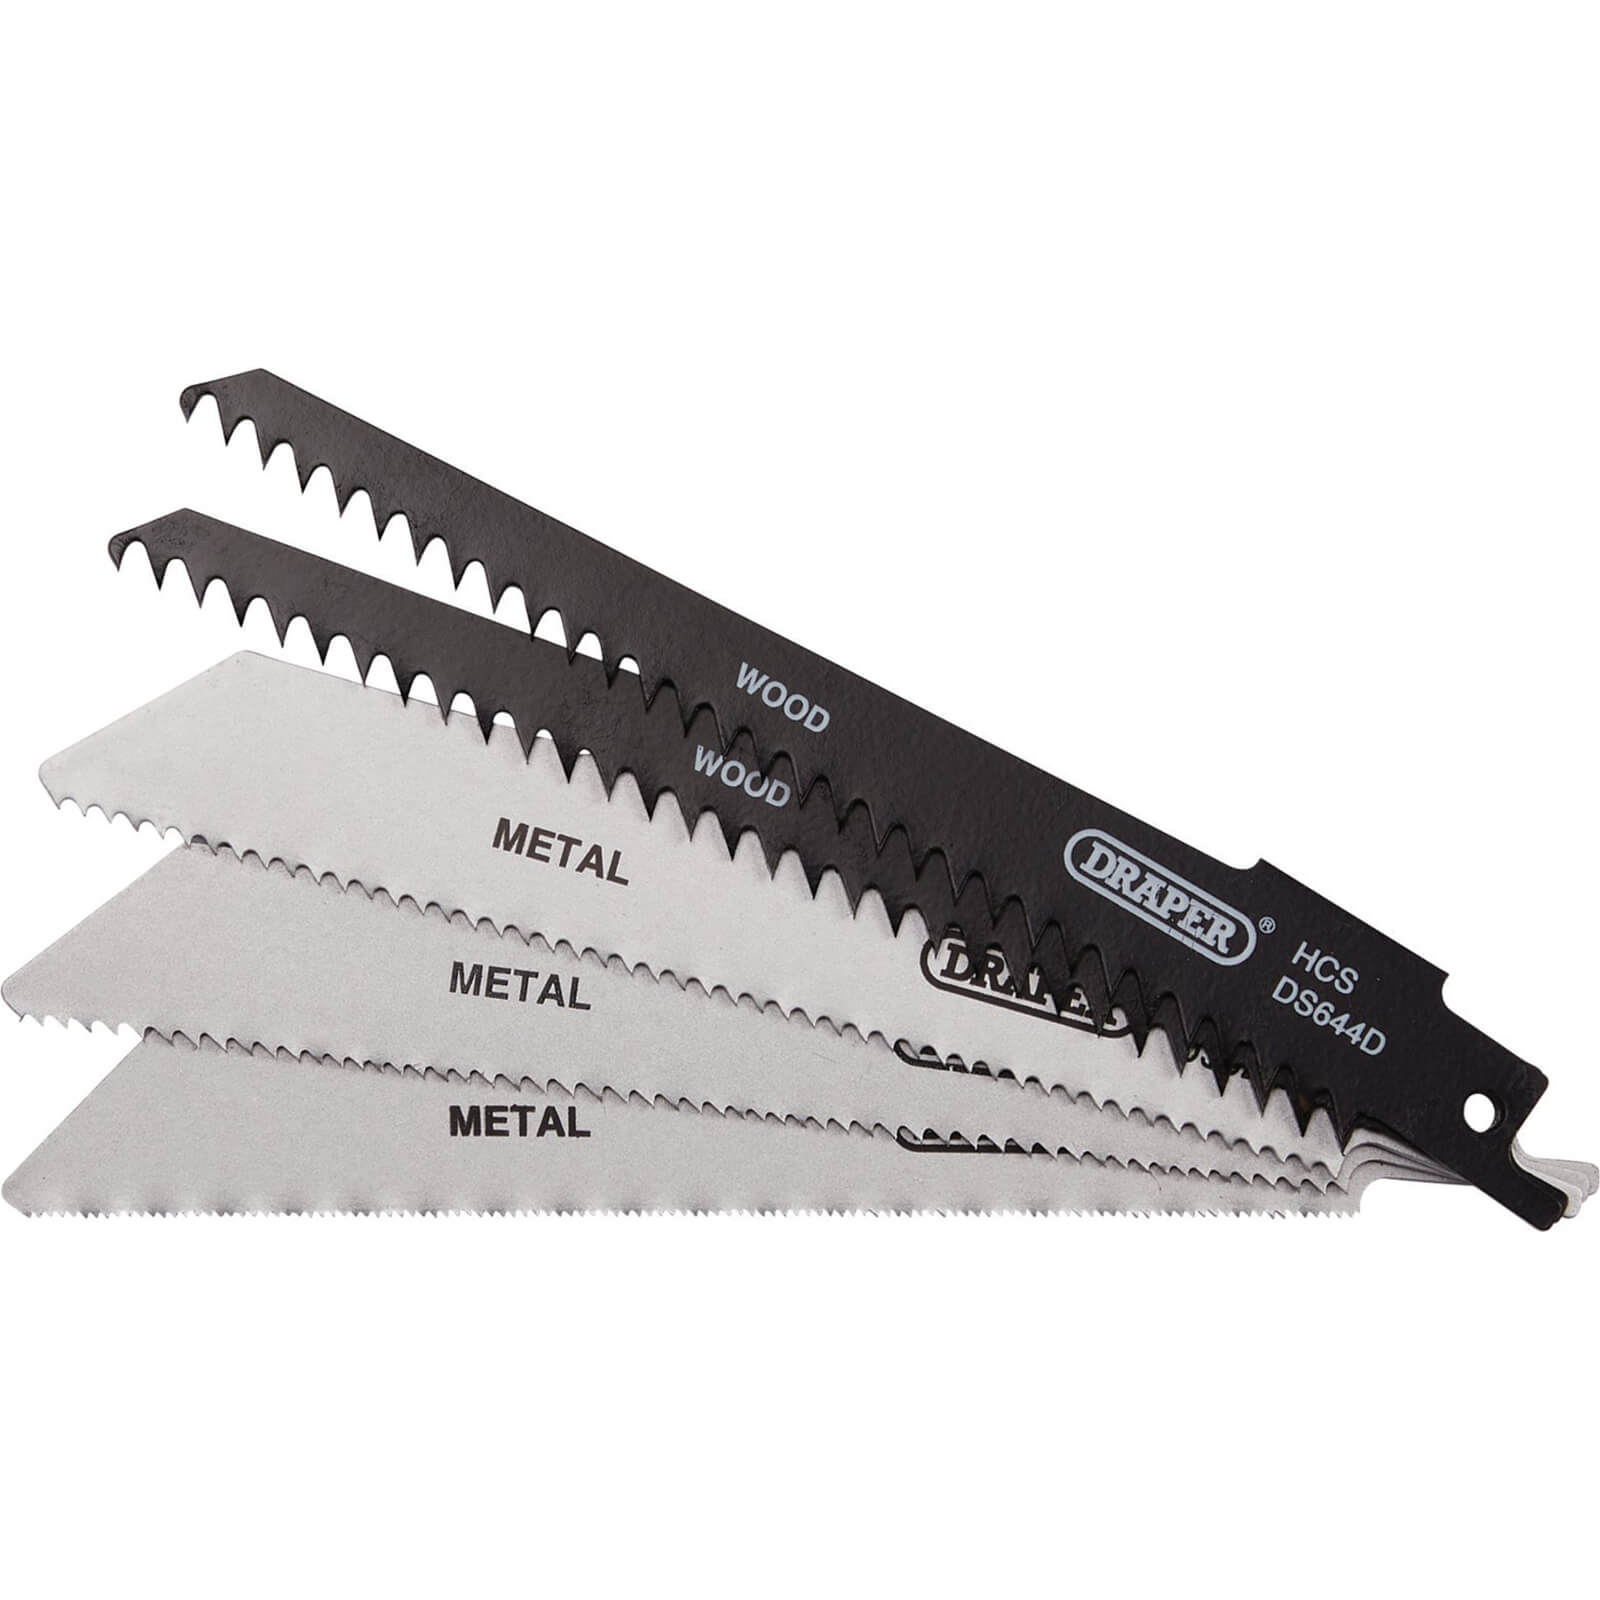 Image of Draper 5 Piece Wood and Metal Cutting Reciprocating Sabre Saw Blade Set